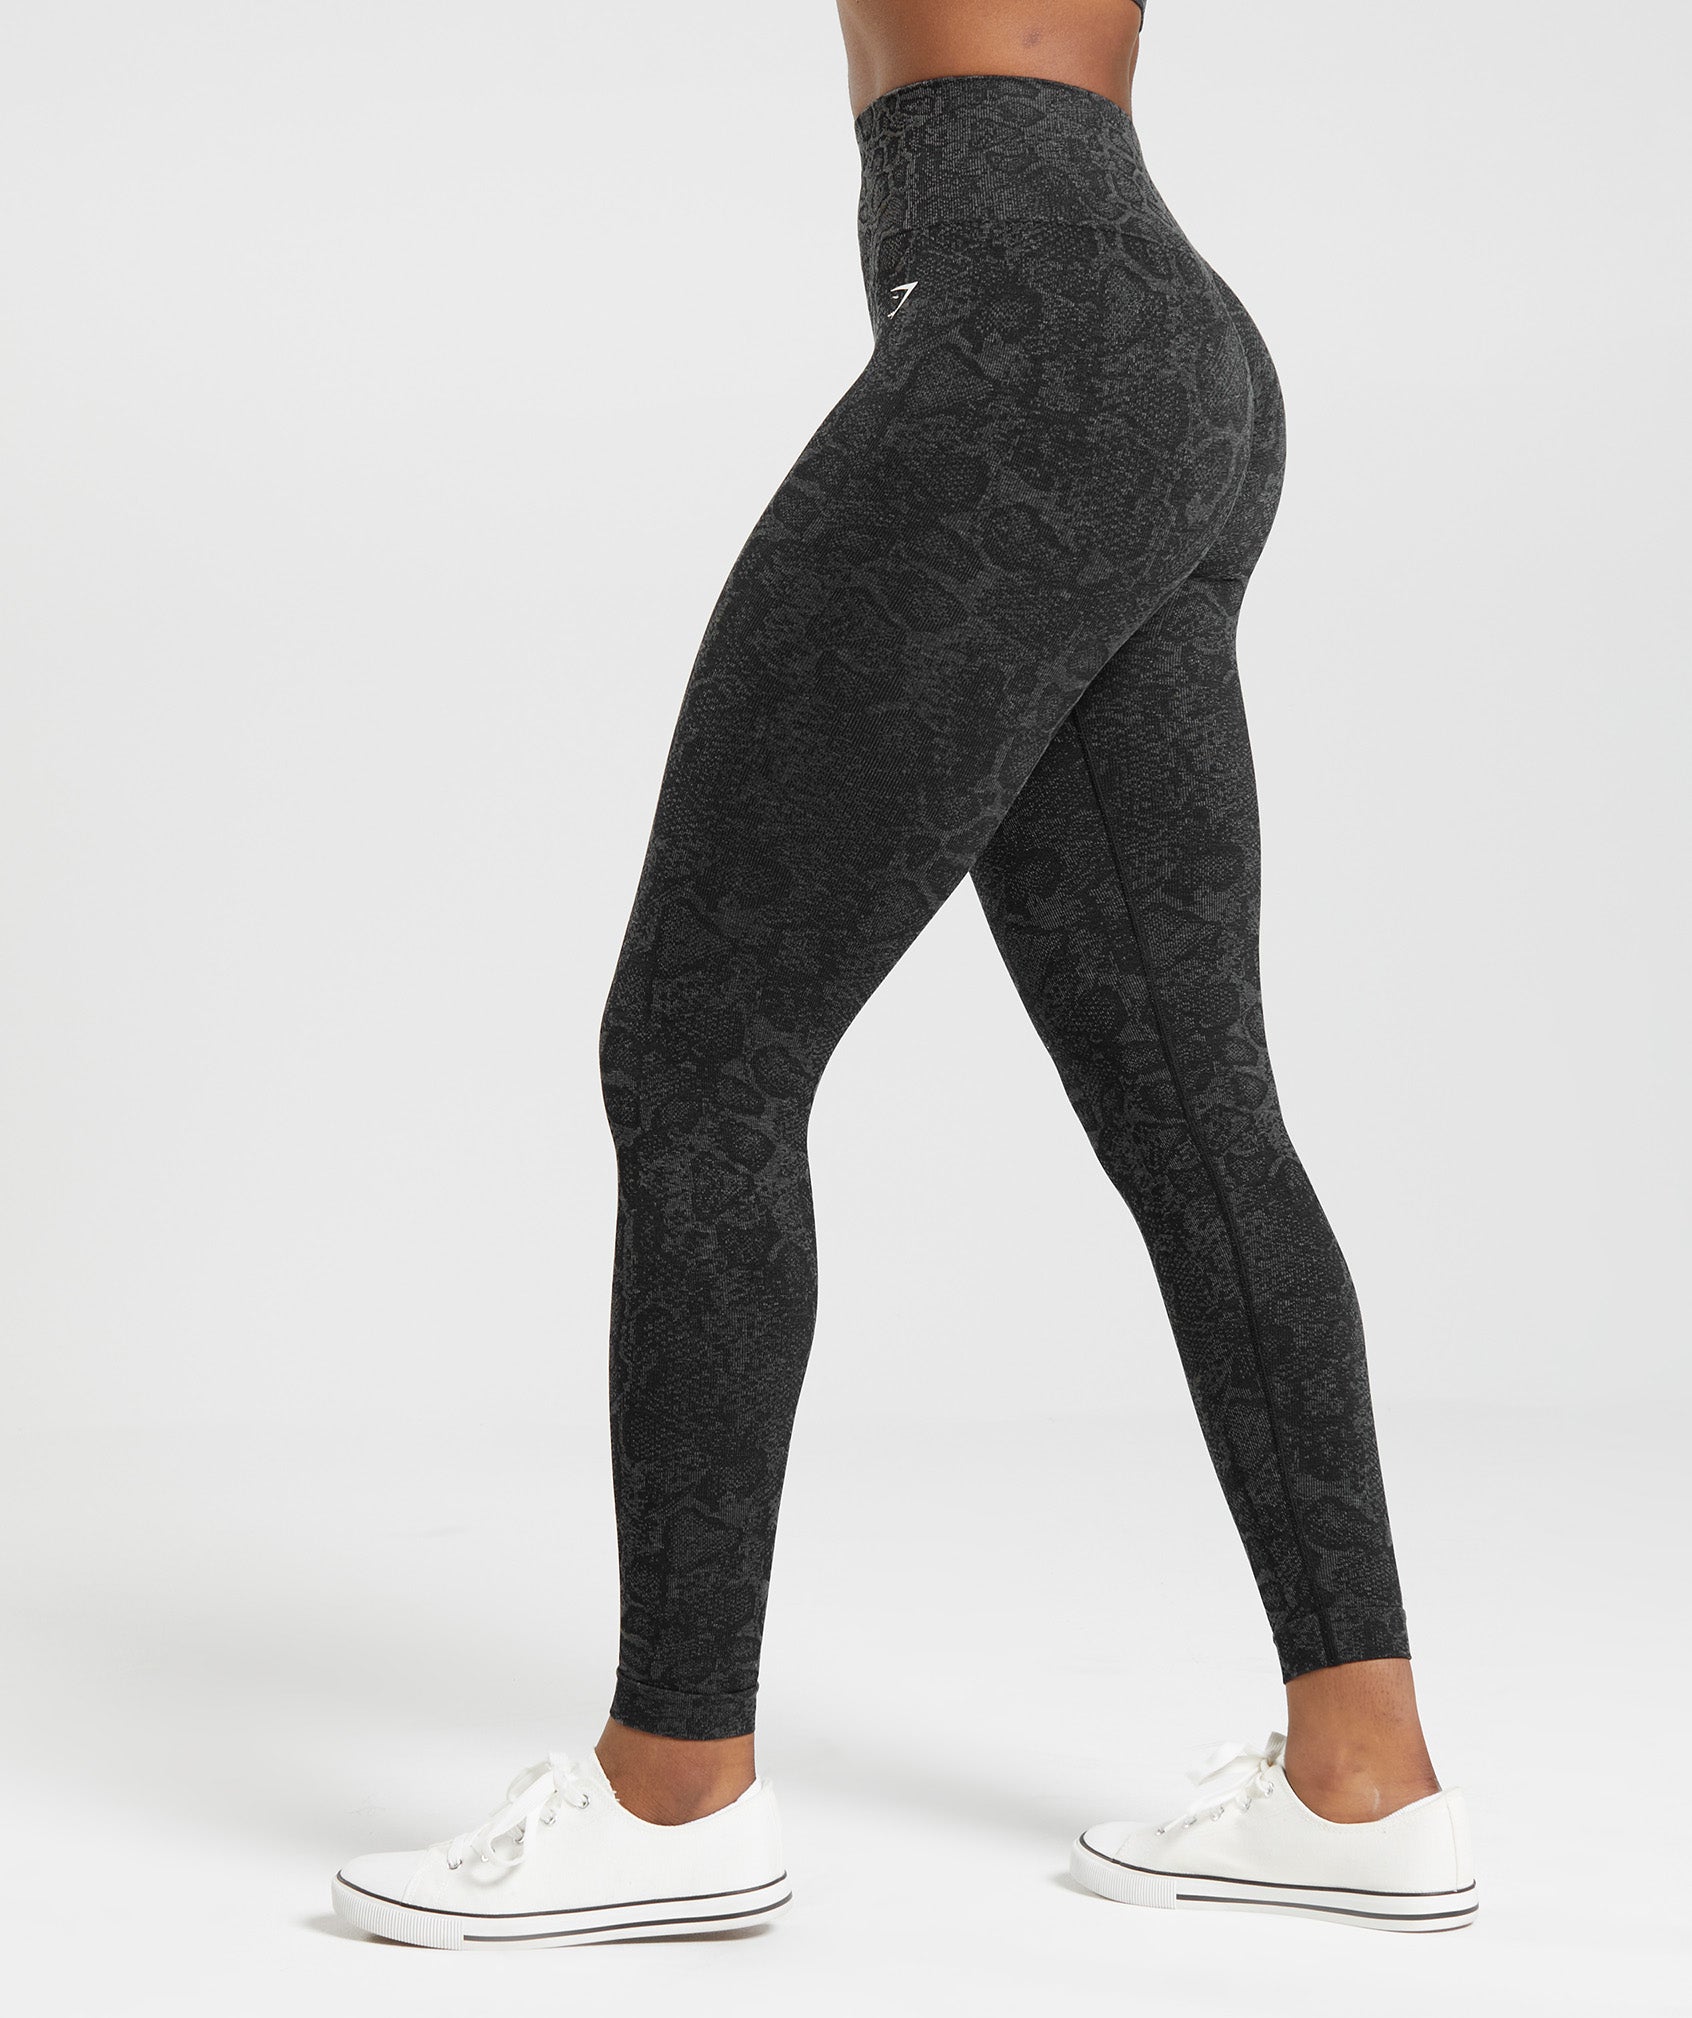 Gymshark Asymmetric Leggings Medium Womens Smokey Gray Black